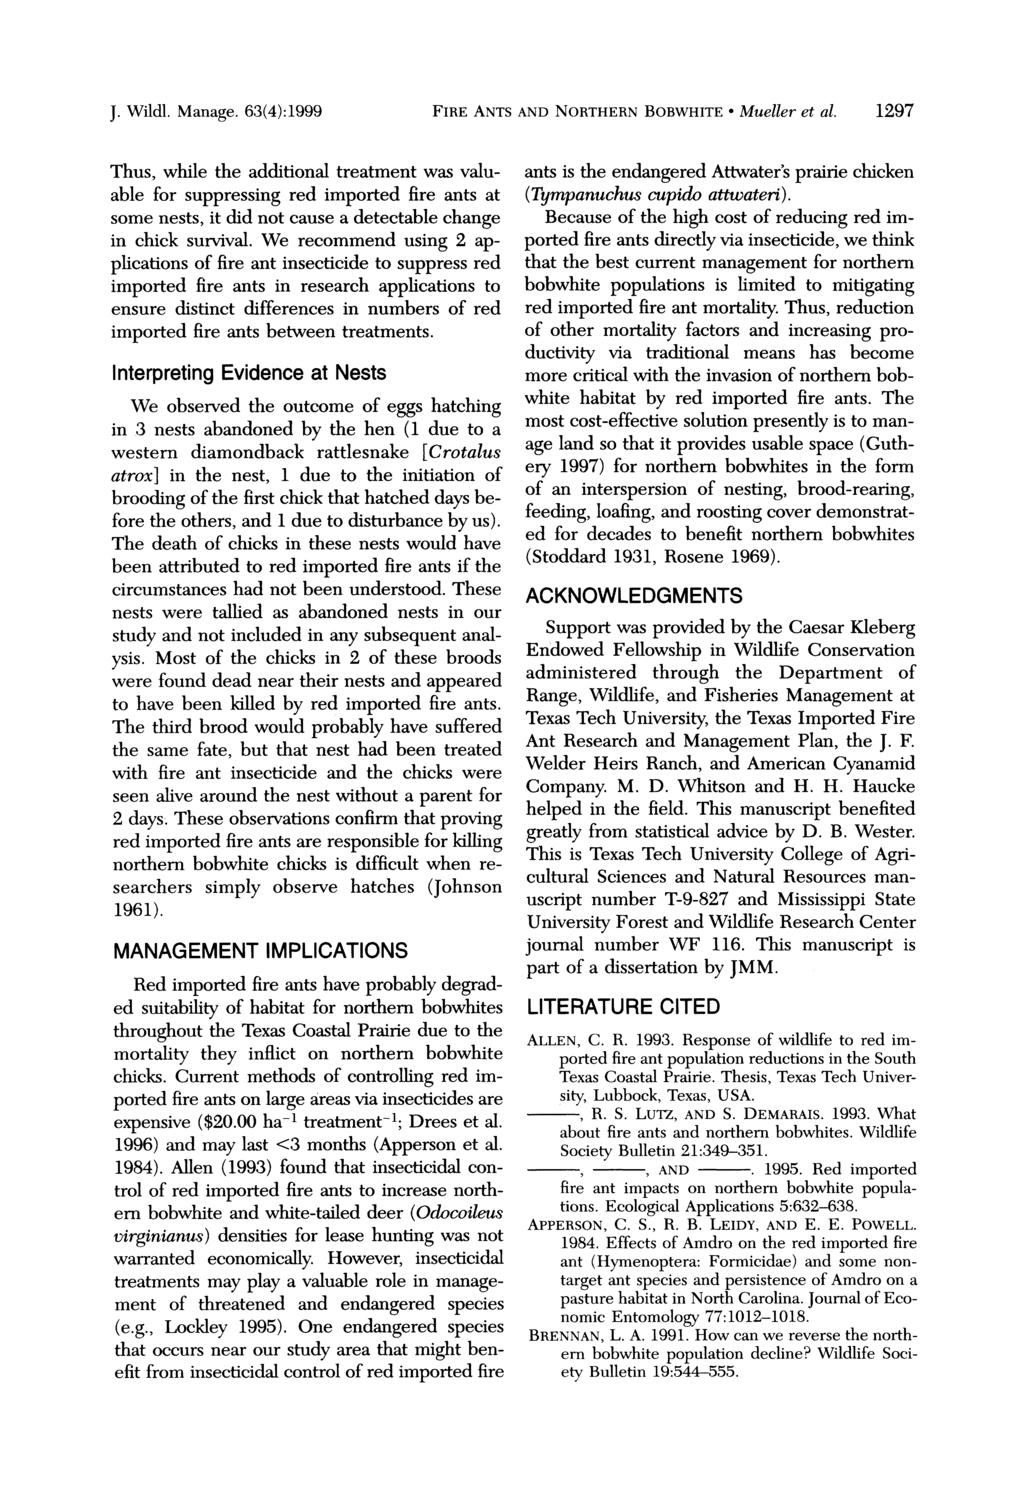 J. Wildl. Manage. 63(4):1999 FIRE ANTS AND NORTHERN BOBWHITE * Mueller et al.